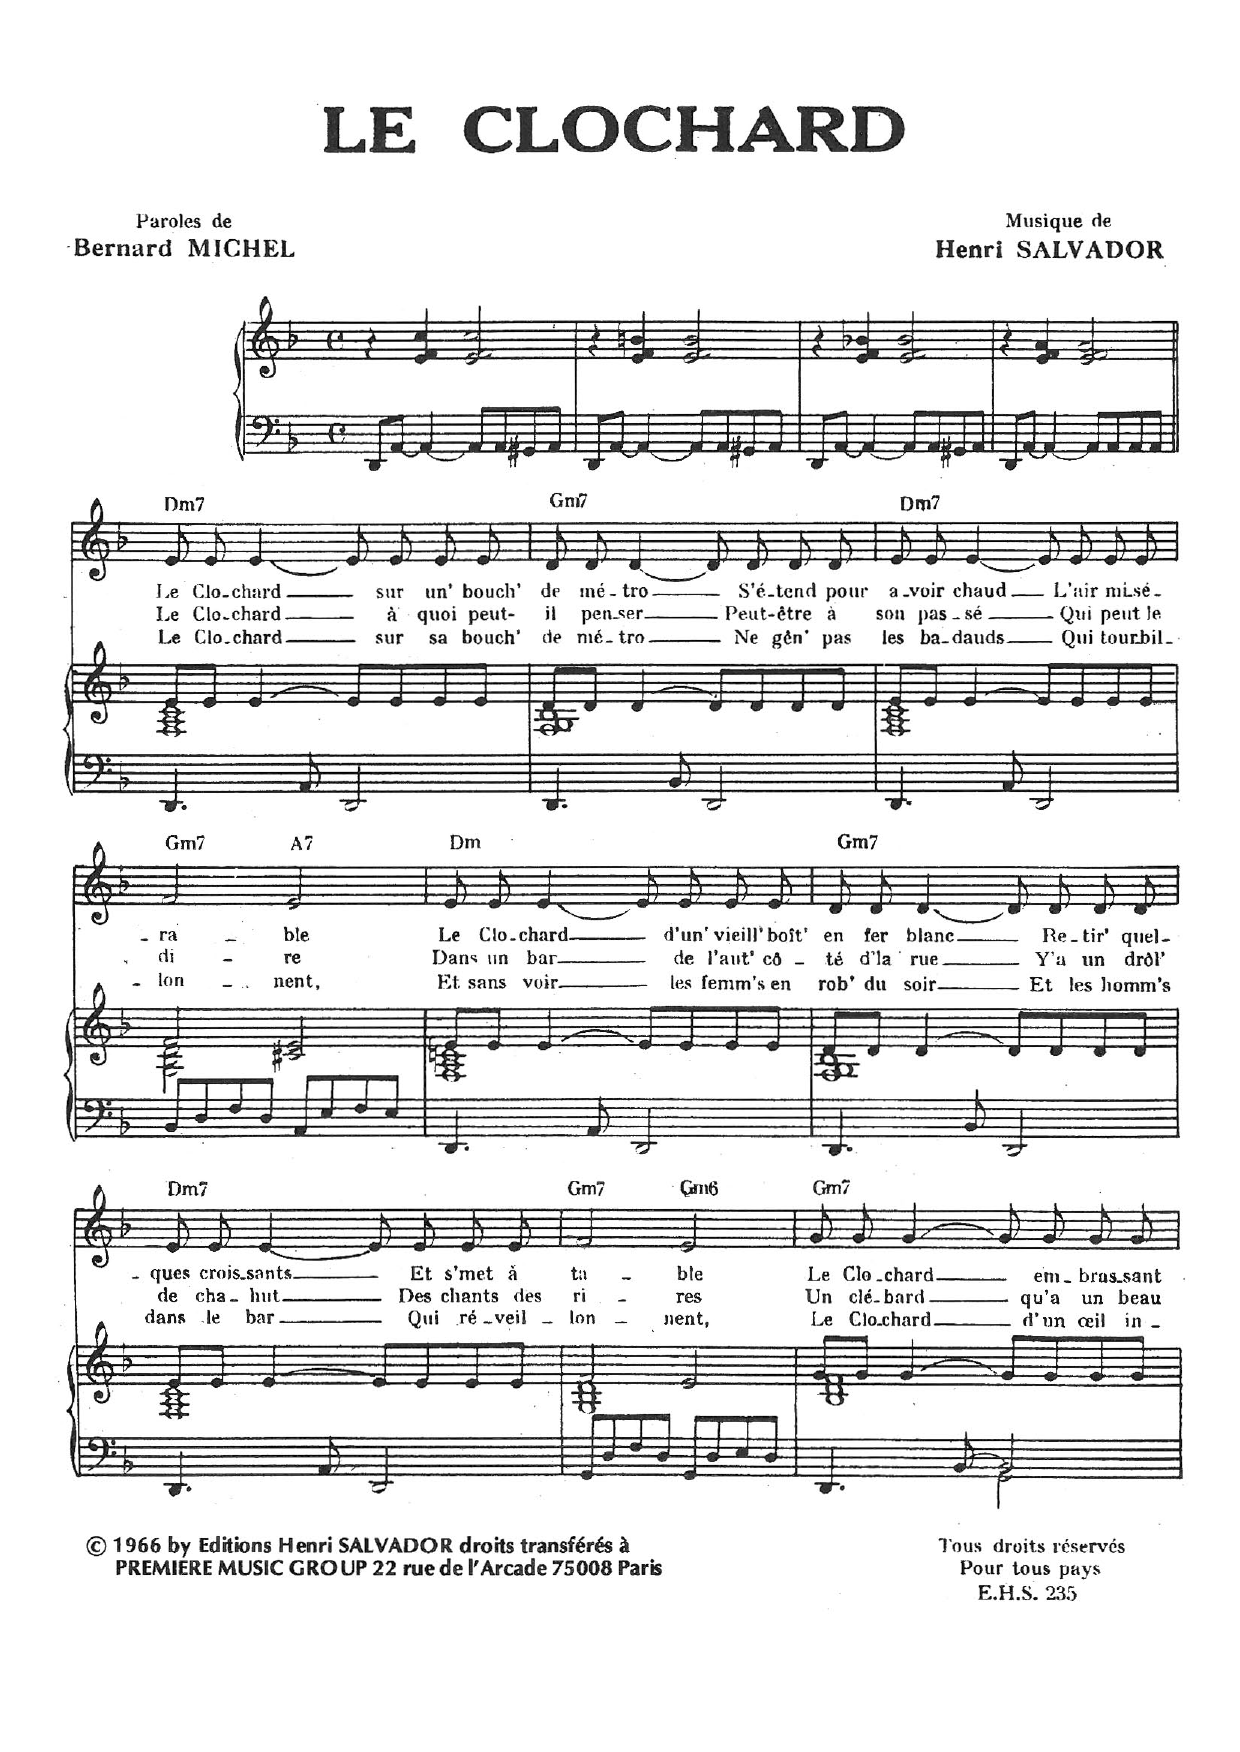 Henri Salvador Clochard Sheet Music Notes & Chords for Piano & Vocal - Download or Print PDF